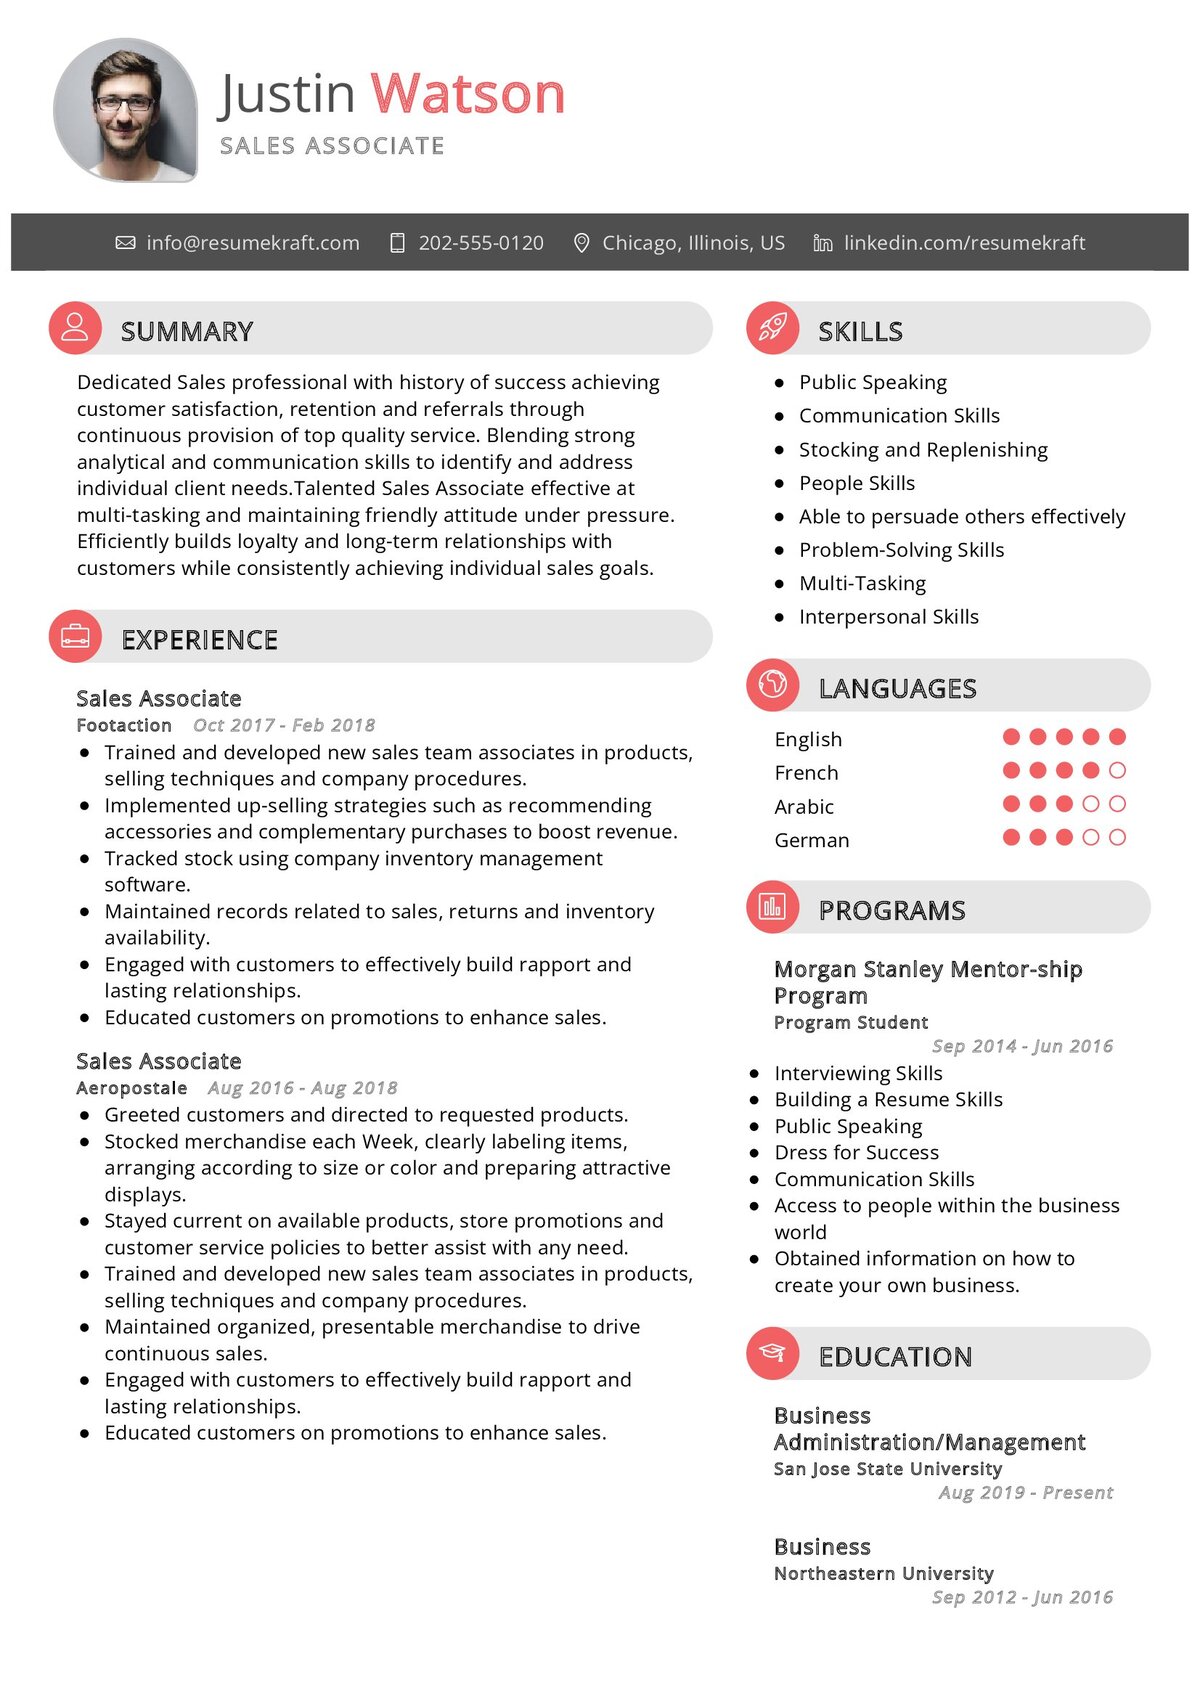 sales associate job description resume skills